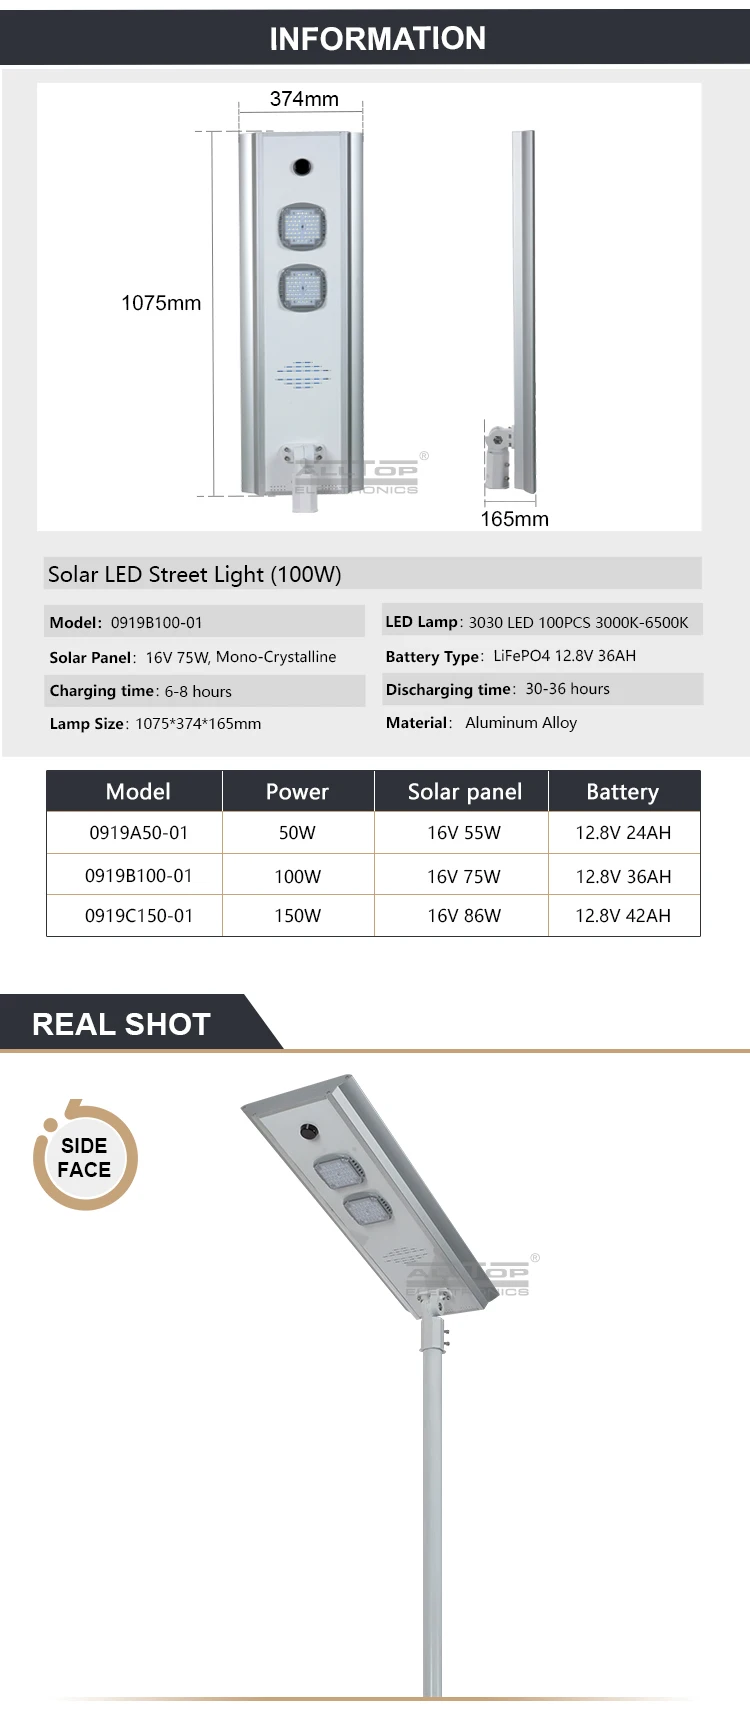 ALLTOP Hot selling waterproof outdoor lighting ip65 bridgelux smd integrated 50w 100w 150w all in one led solar street light